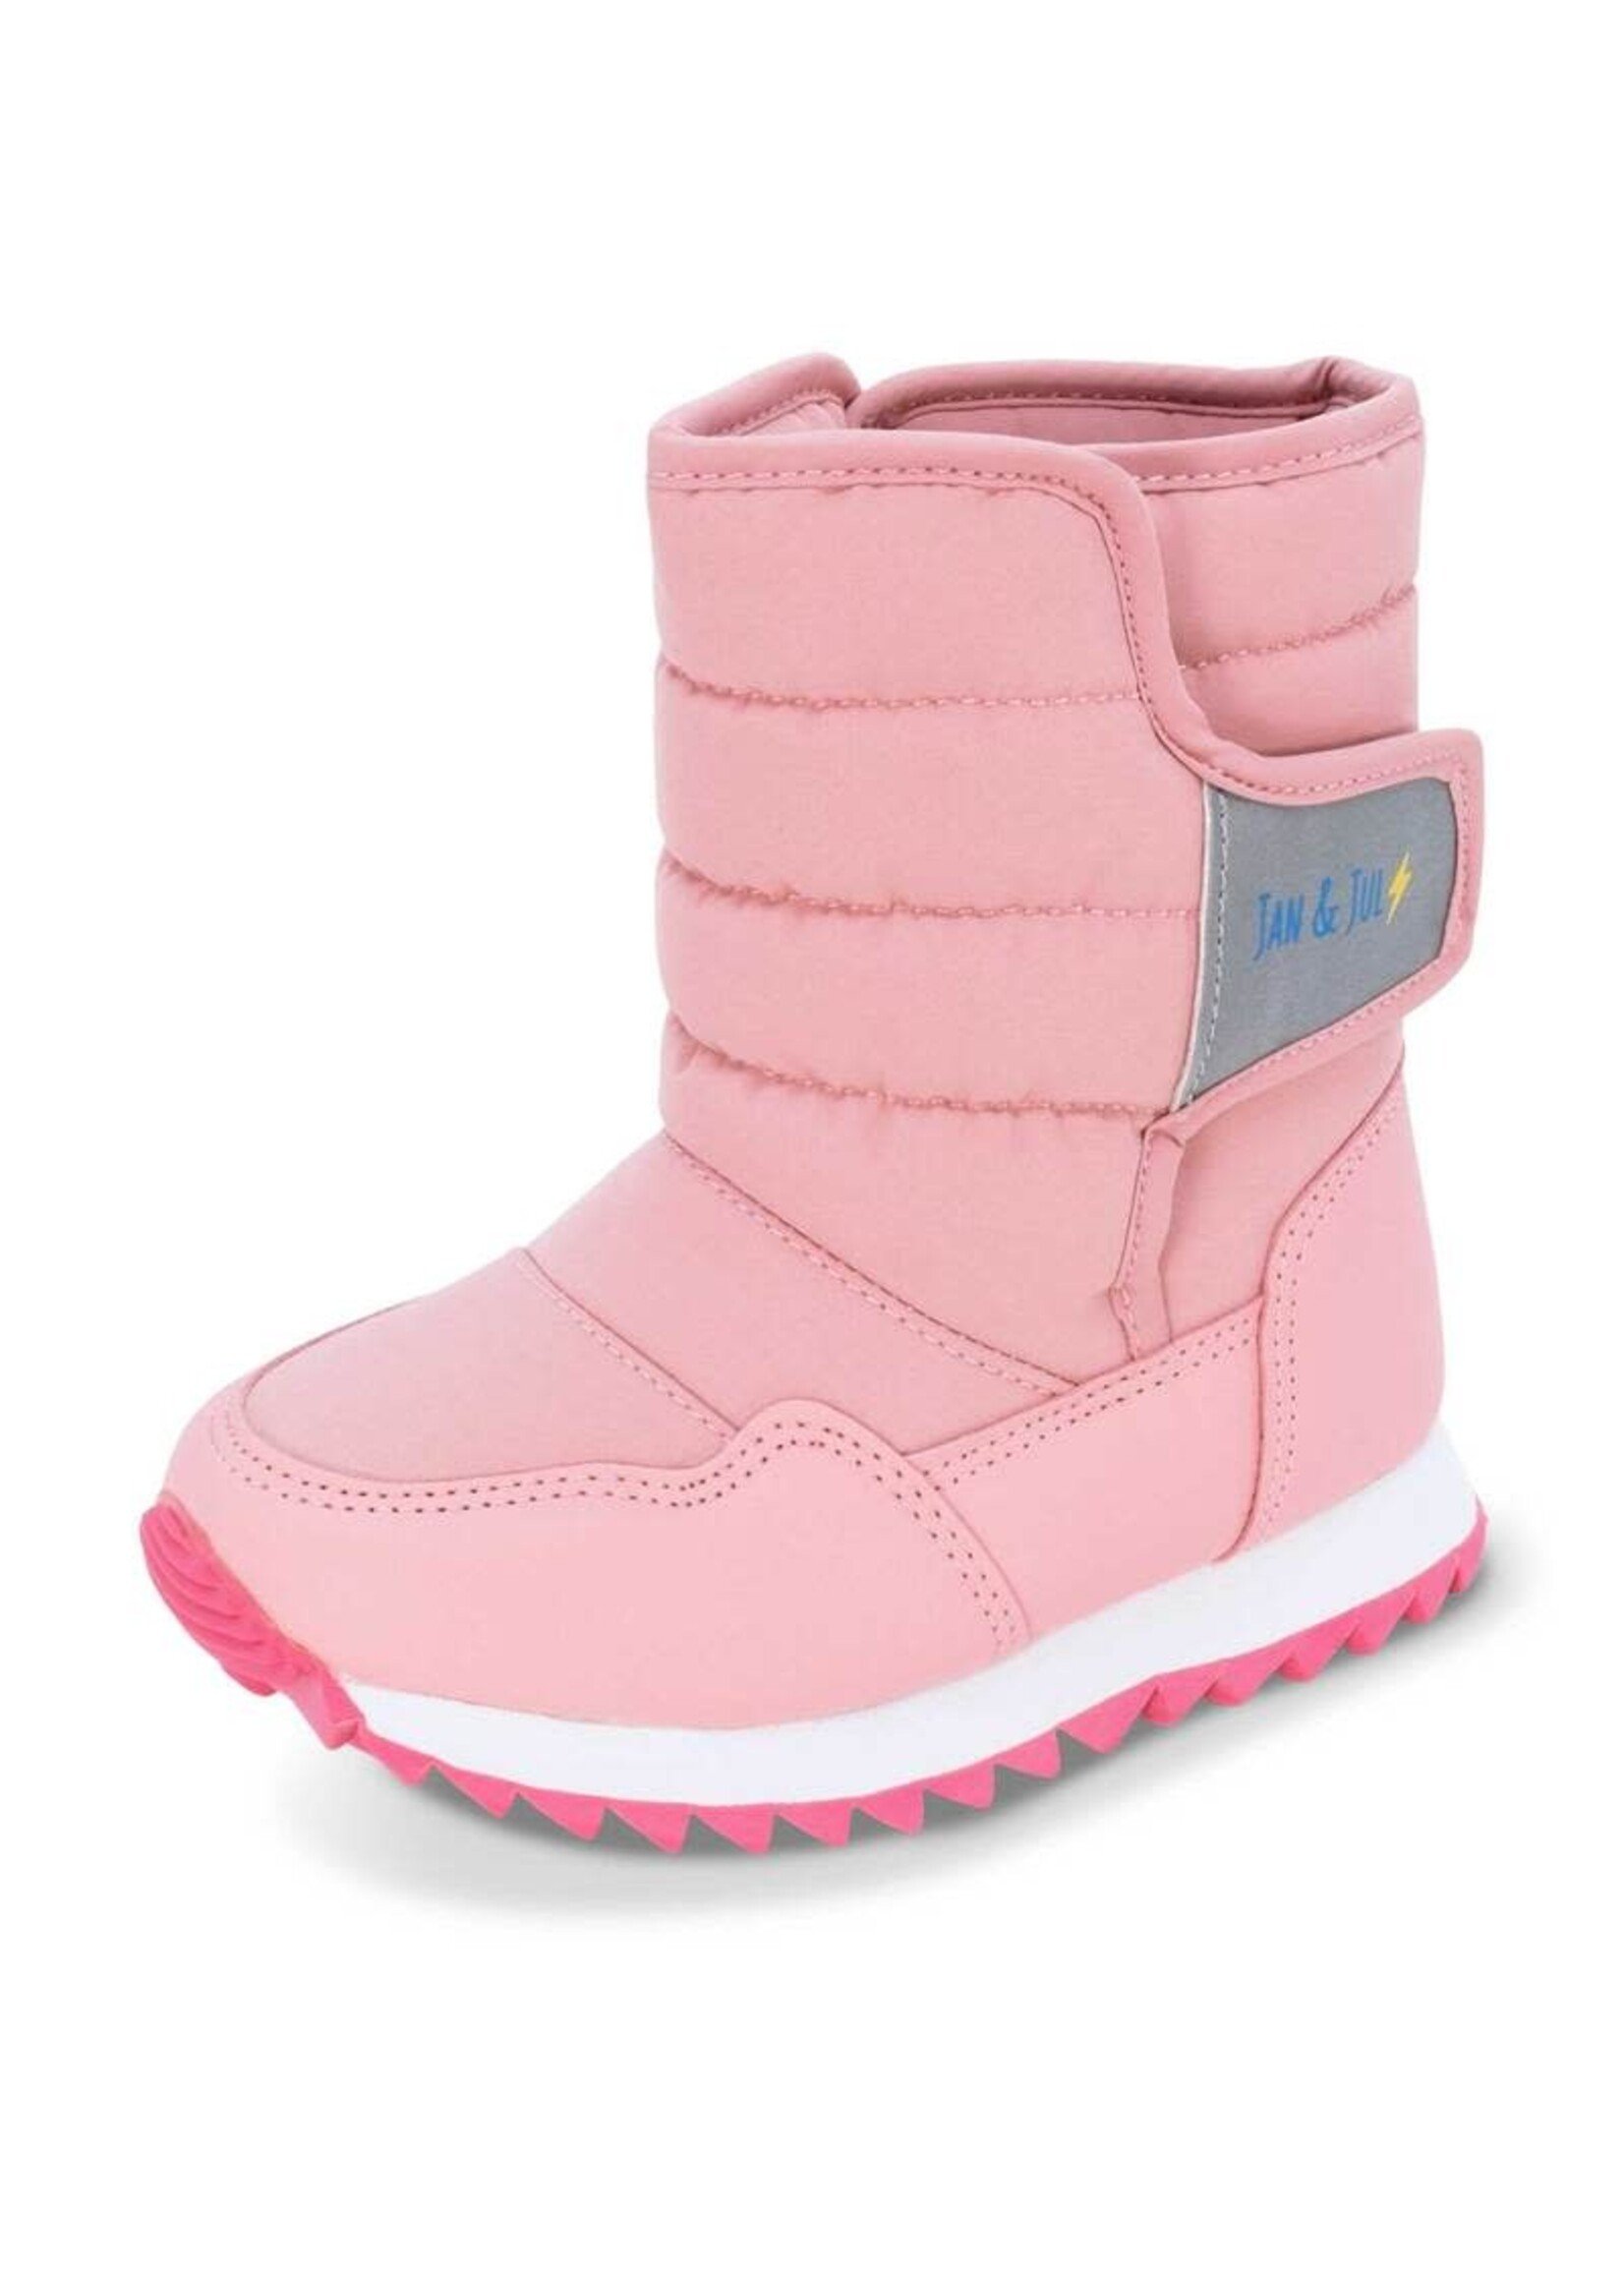 Jan & Jul Jan & Jul Toasty-Dry Tall Puffy Winter Boots- Dusty Pink